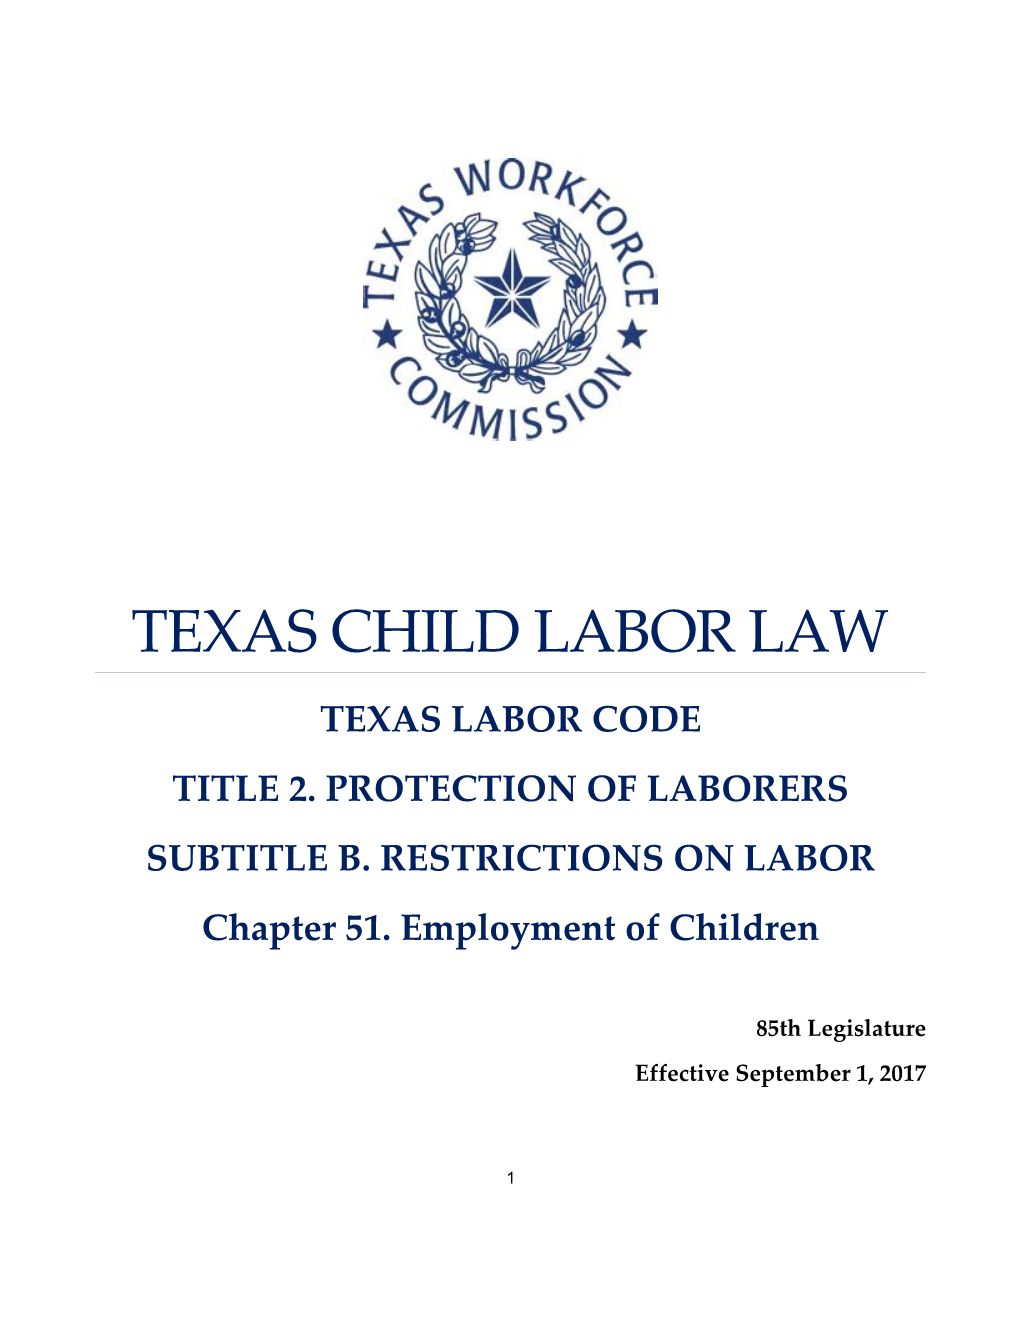 Chapter 51, Labor Code - Employment of Children